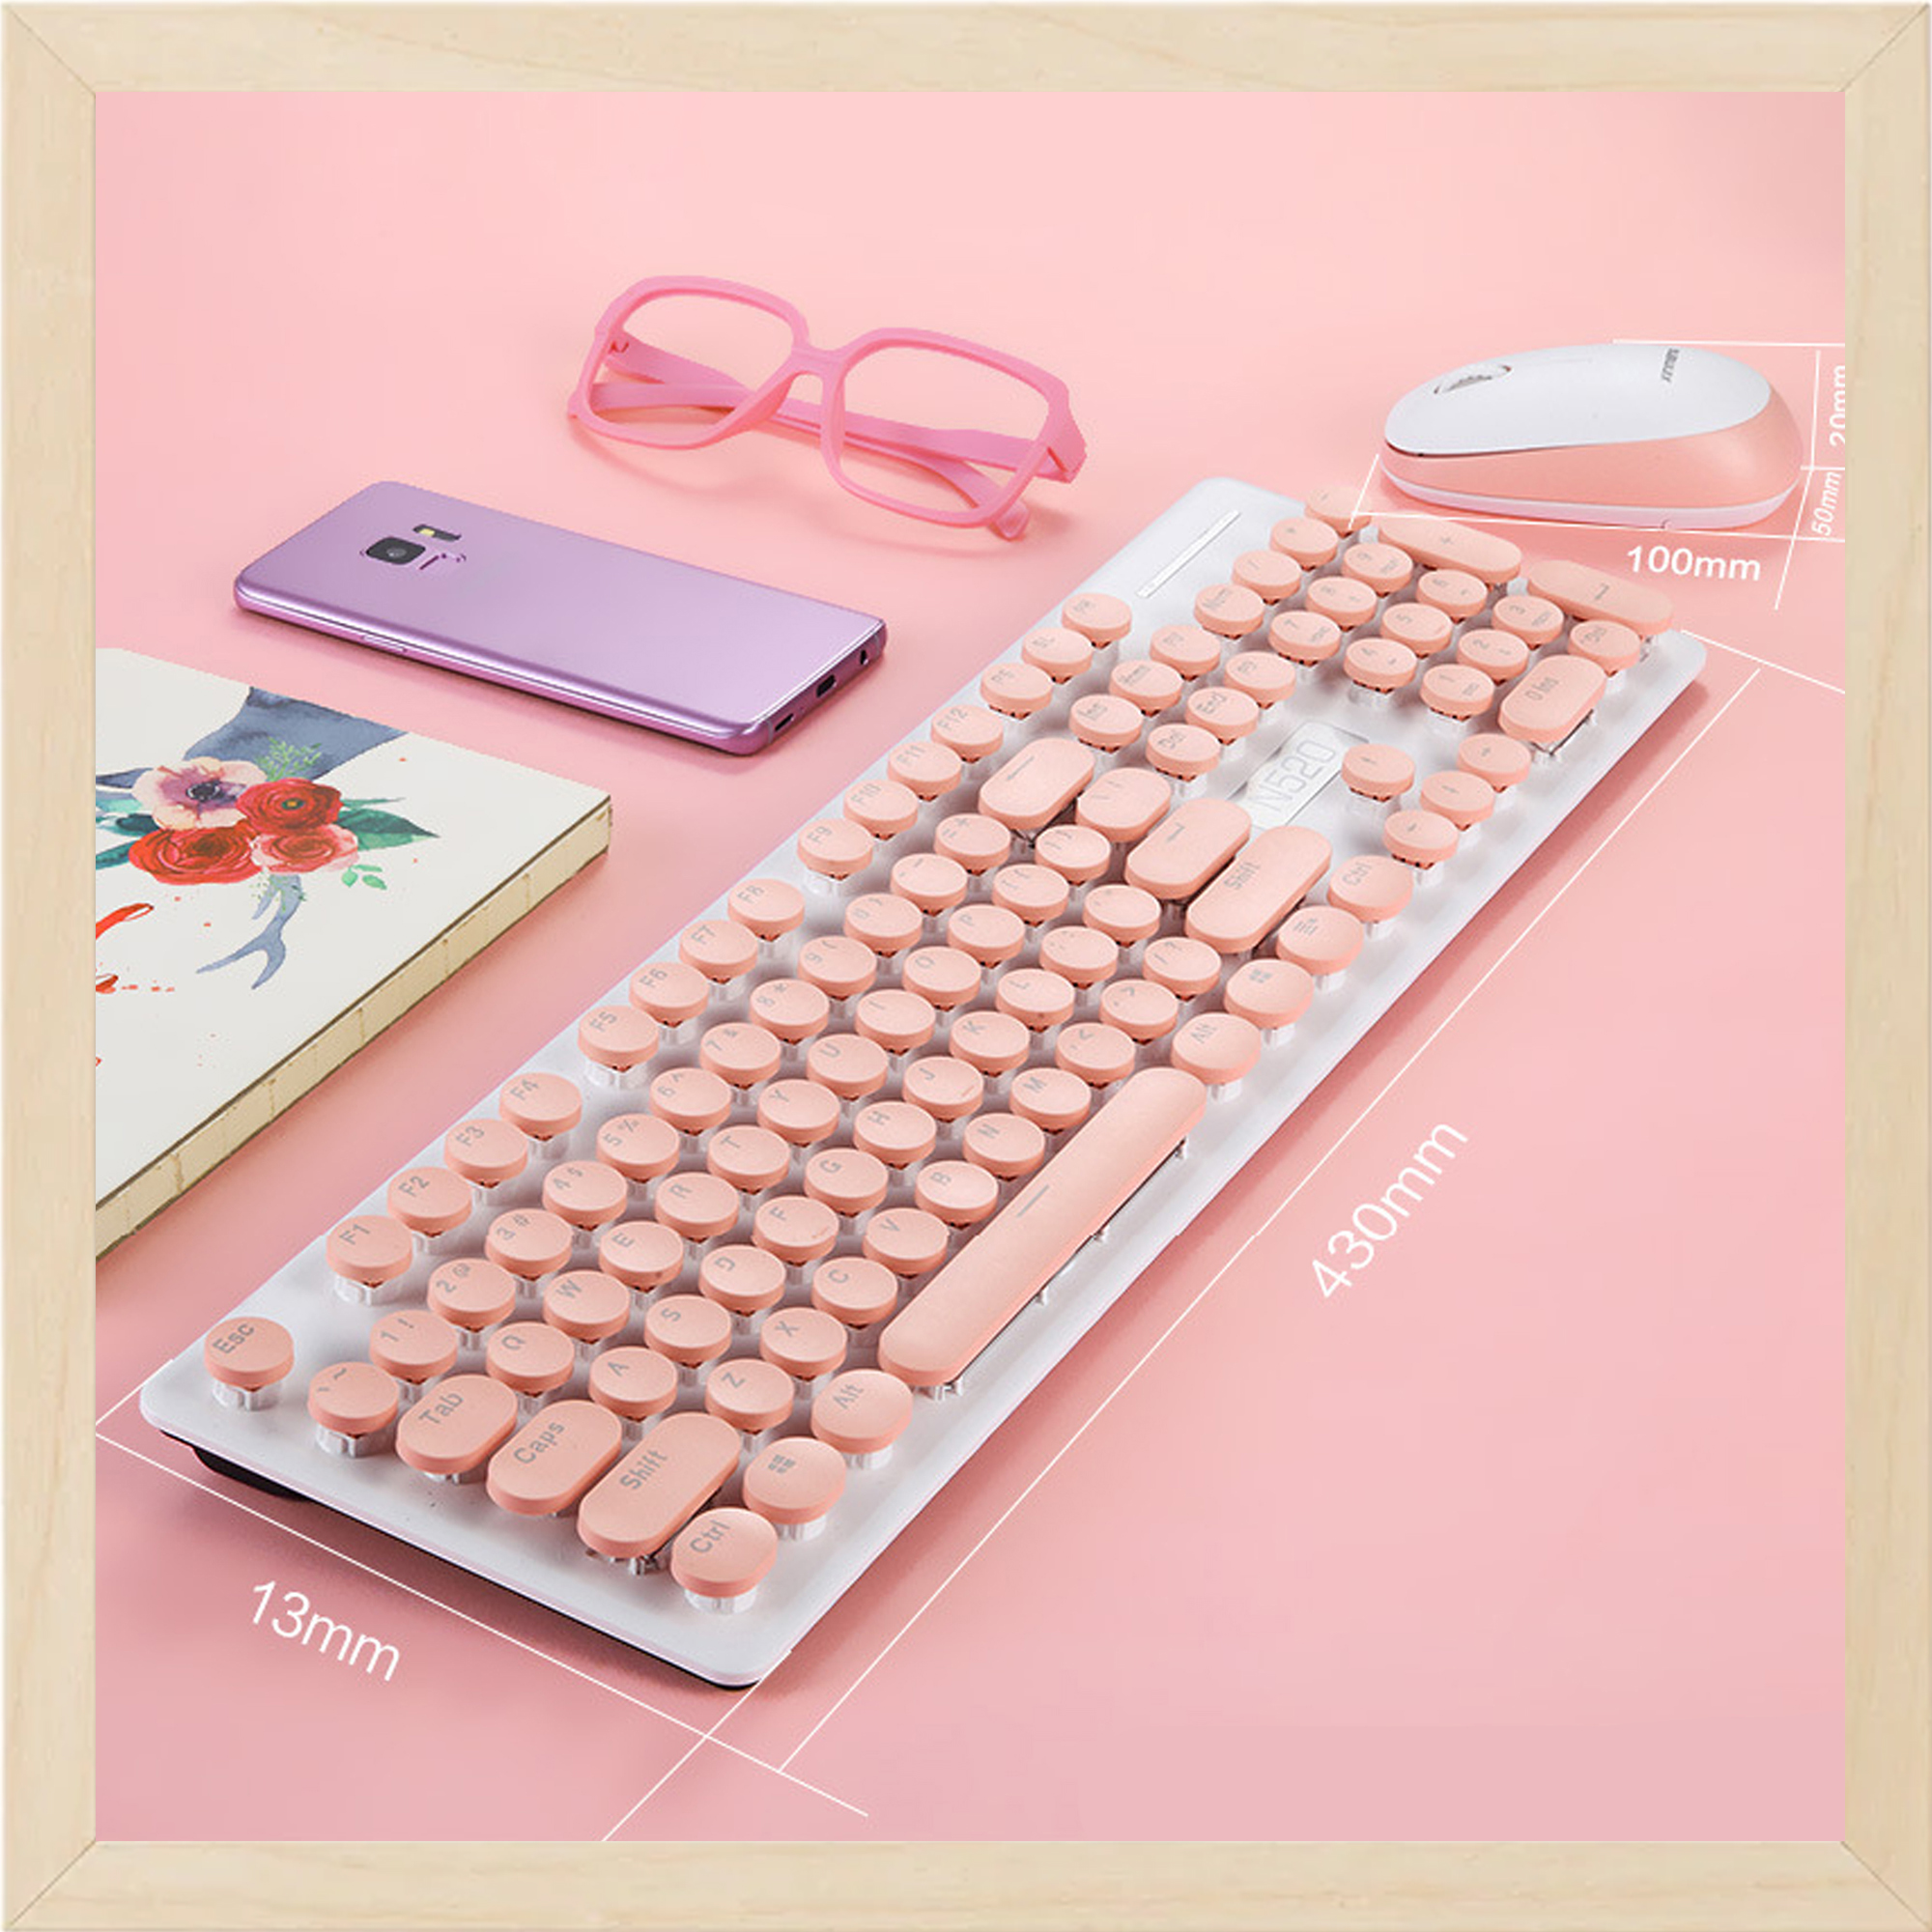 Poca Care Keyboard เม้าส์ คีย์บอร์ด ไร้สาย กันน้ำหกใส่ ปุ่มลอย สีพาสเทล Wireless Raspberry pi 400 Keyboard Mouse Girl Cute Pink retro Wireless Set Home Office